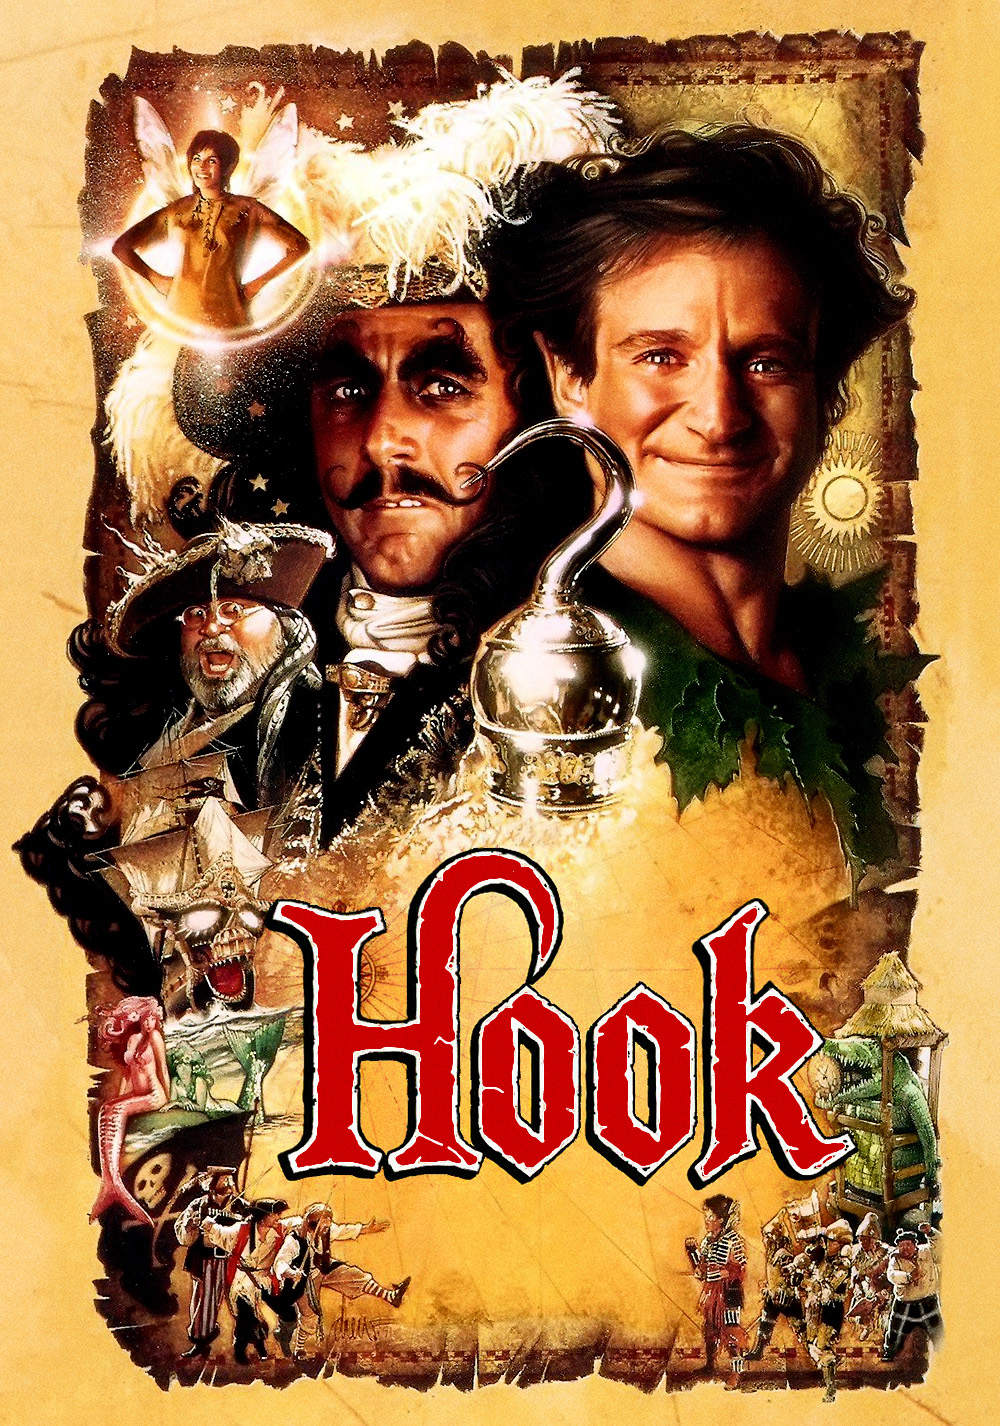 Hook (1991) Poster